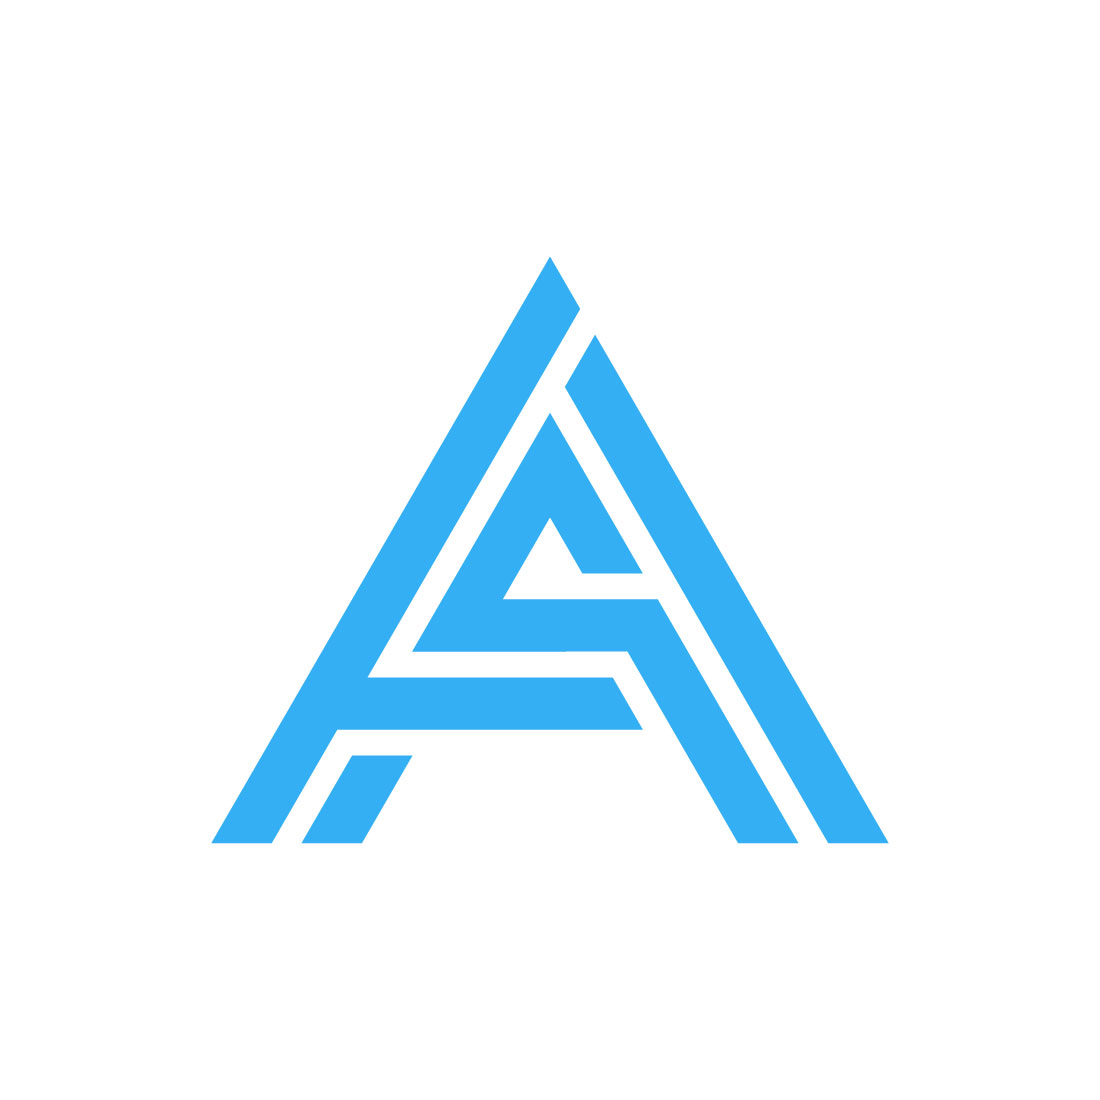 A Letter Logo Design cover image.